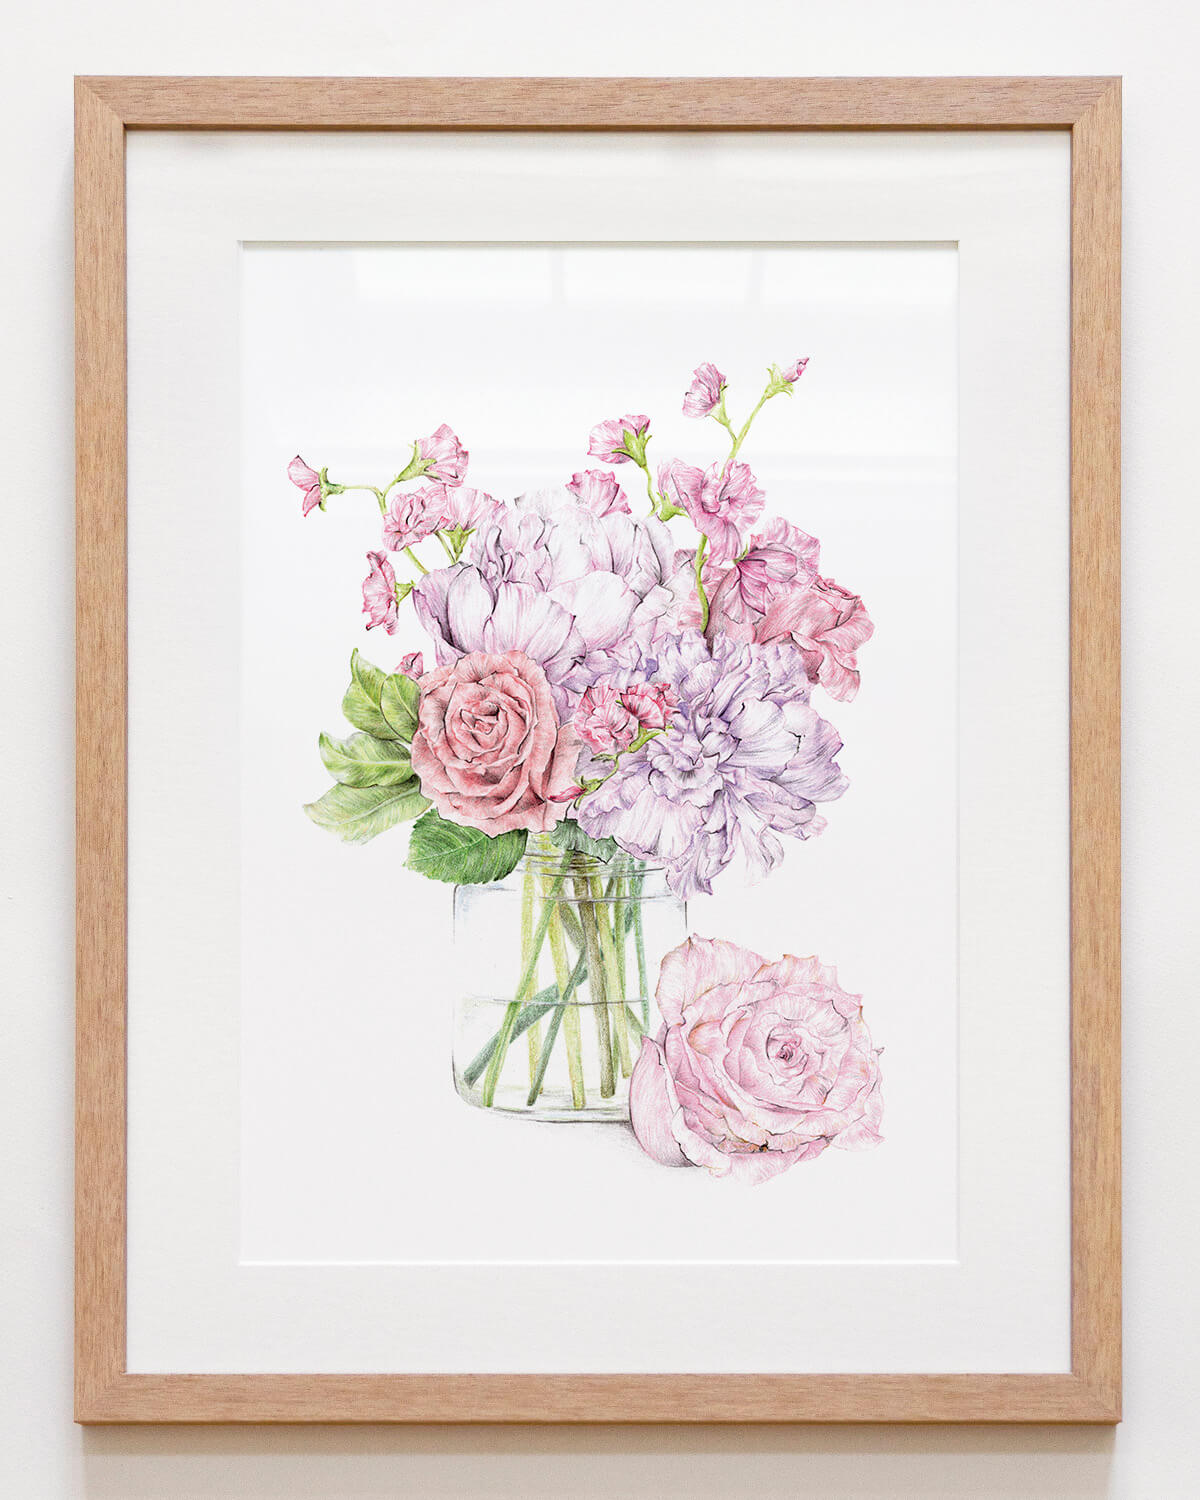 Framed botanical fine art print with garden florals